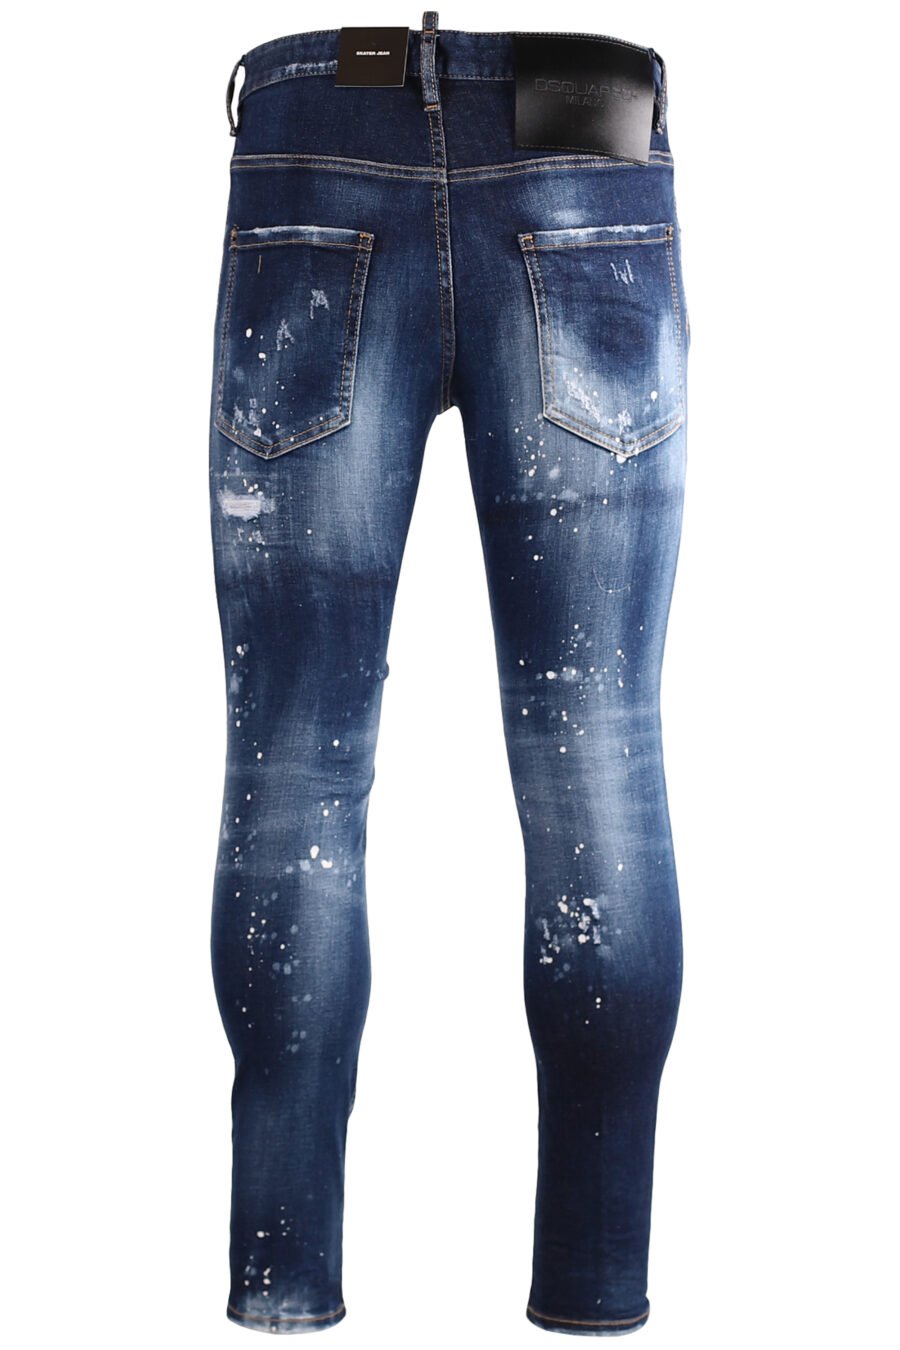 Pantalón vaquero "Skater" azul semidesgastado con splash blanco - IMG 7260